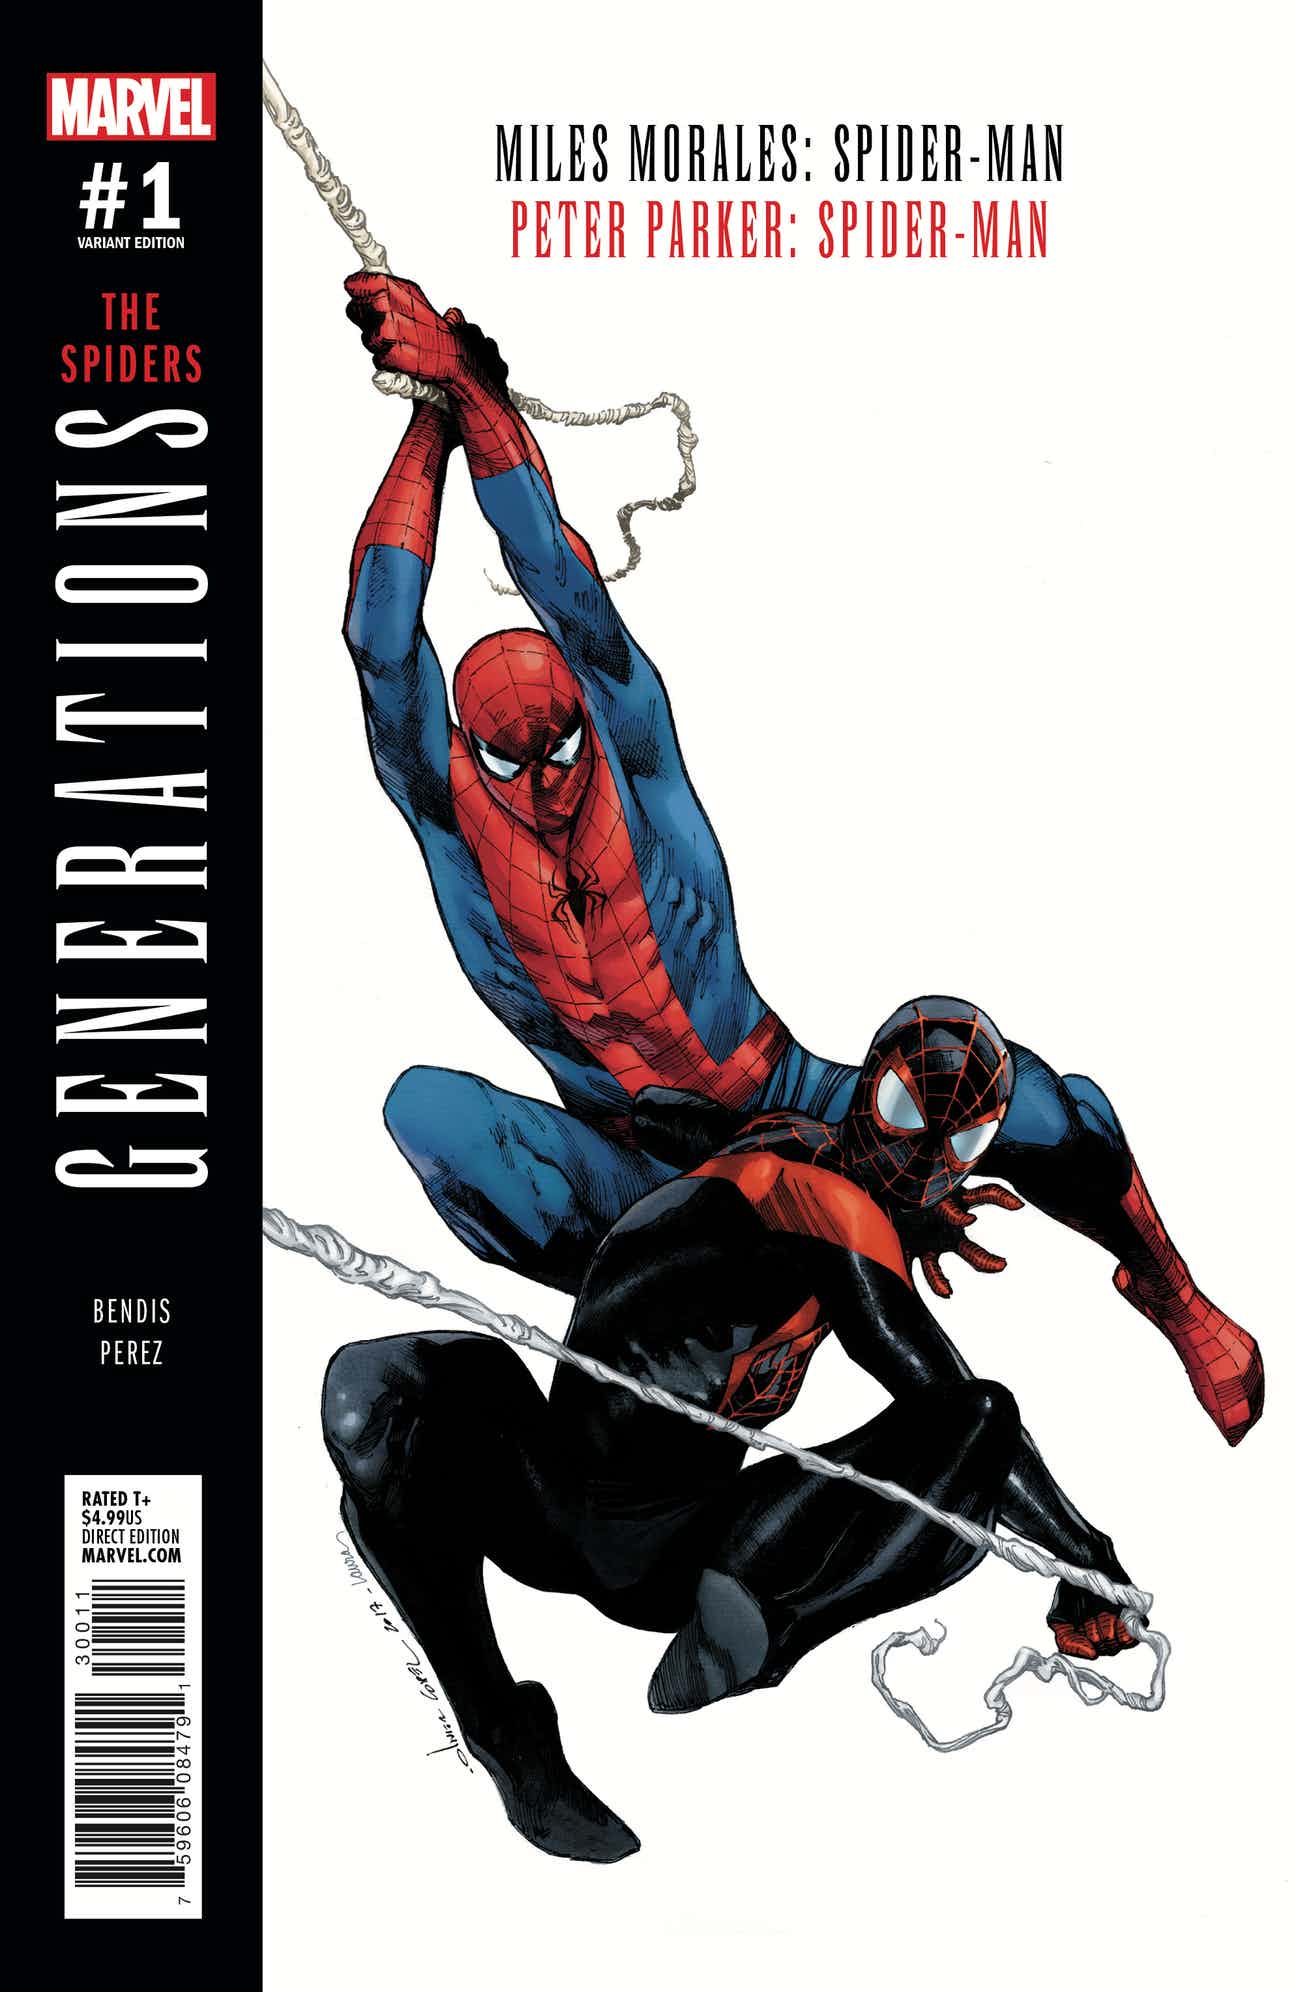 Generations: Miles Morales Spider-Man & Peter Parker Spider-Man Vol 1 1 |  Marvel Database | Fandom